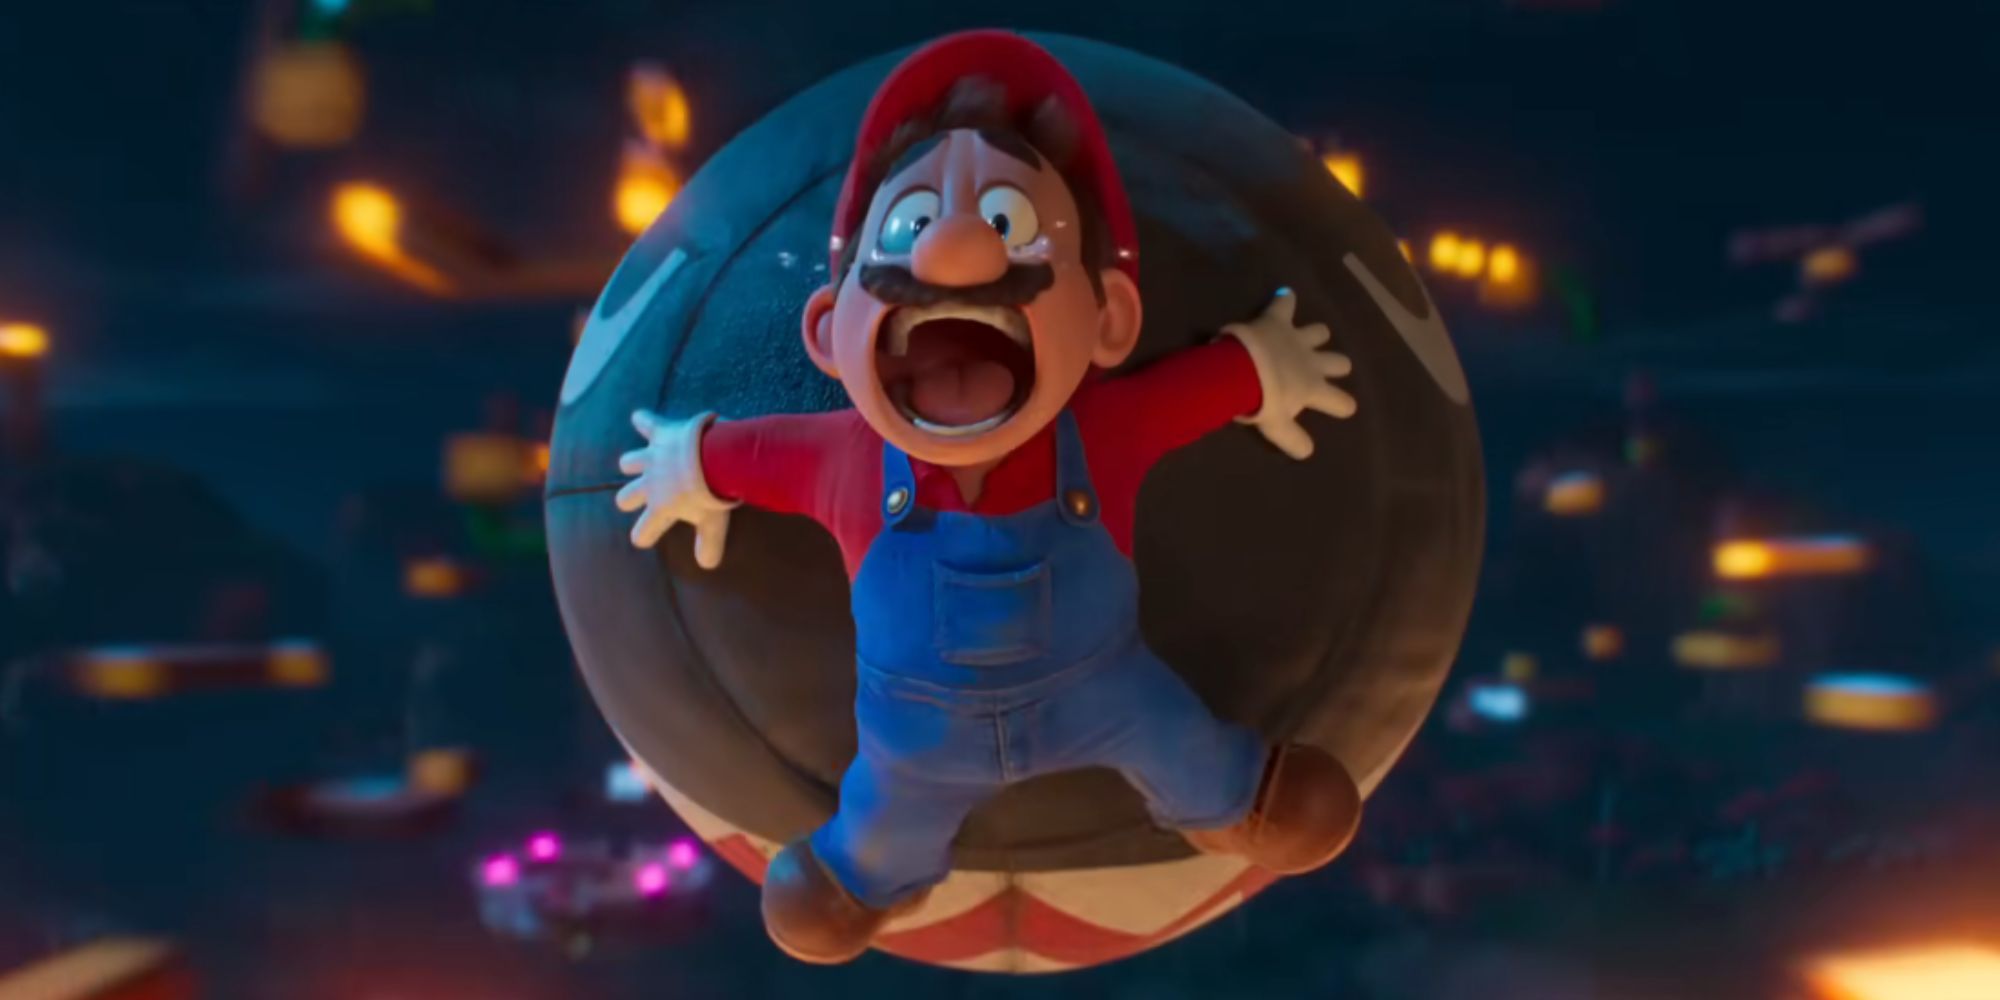 In The Super Mario Bros. Movie, Bullet Building carries Mario into the night sky.